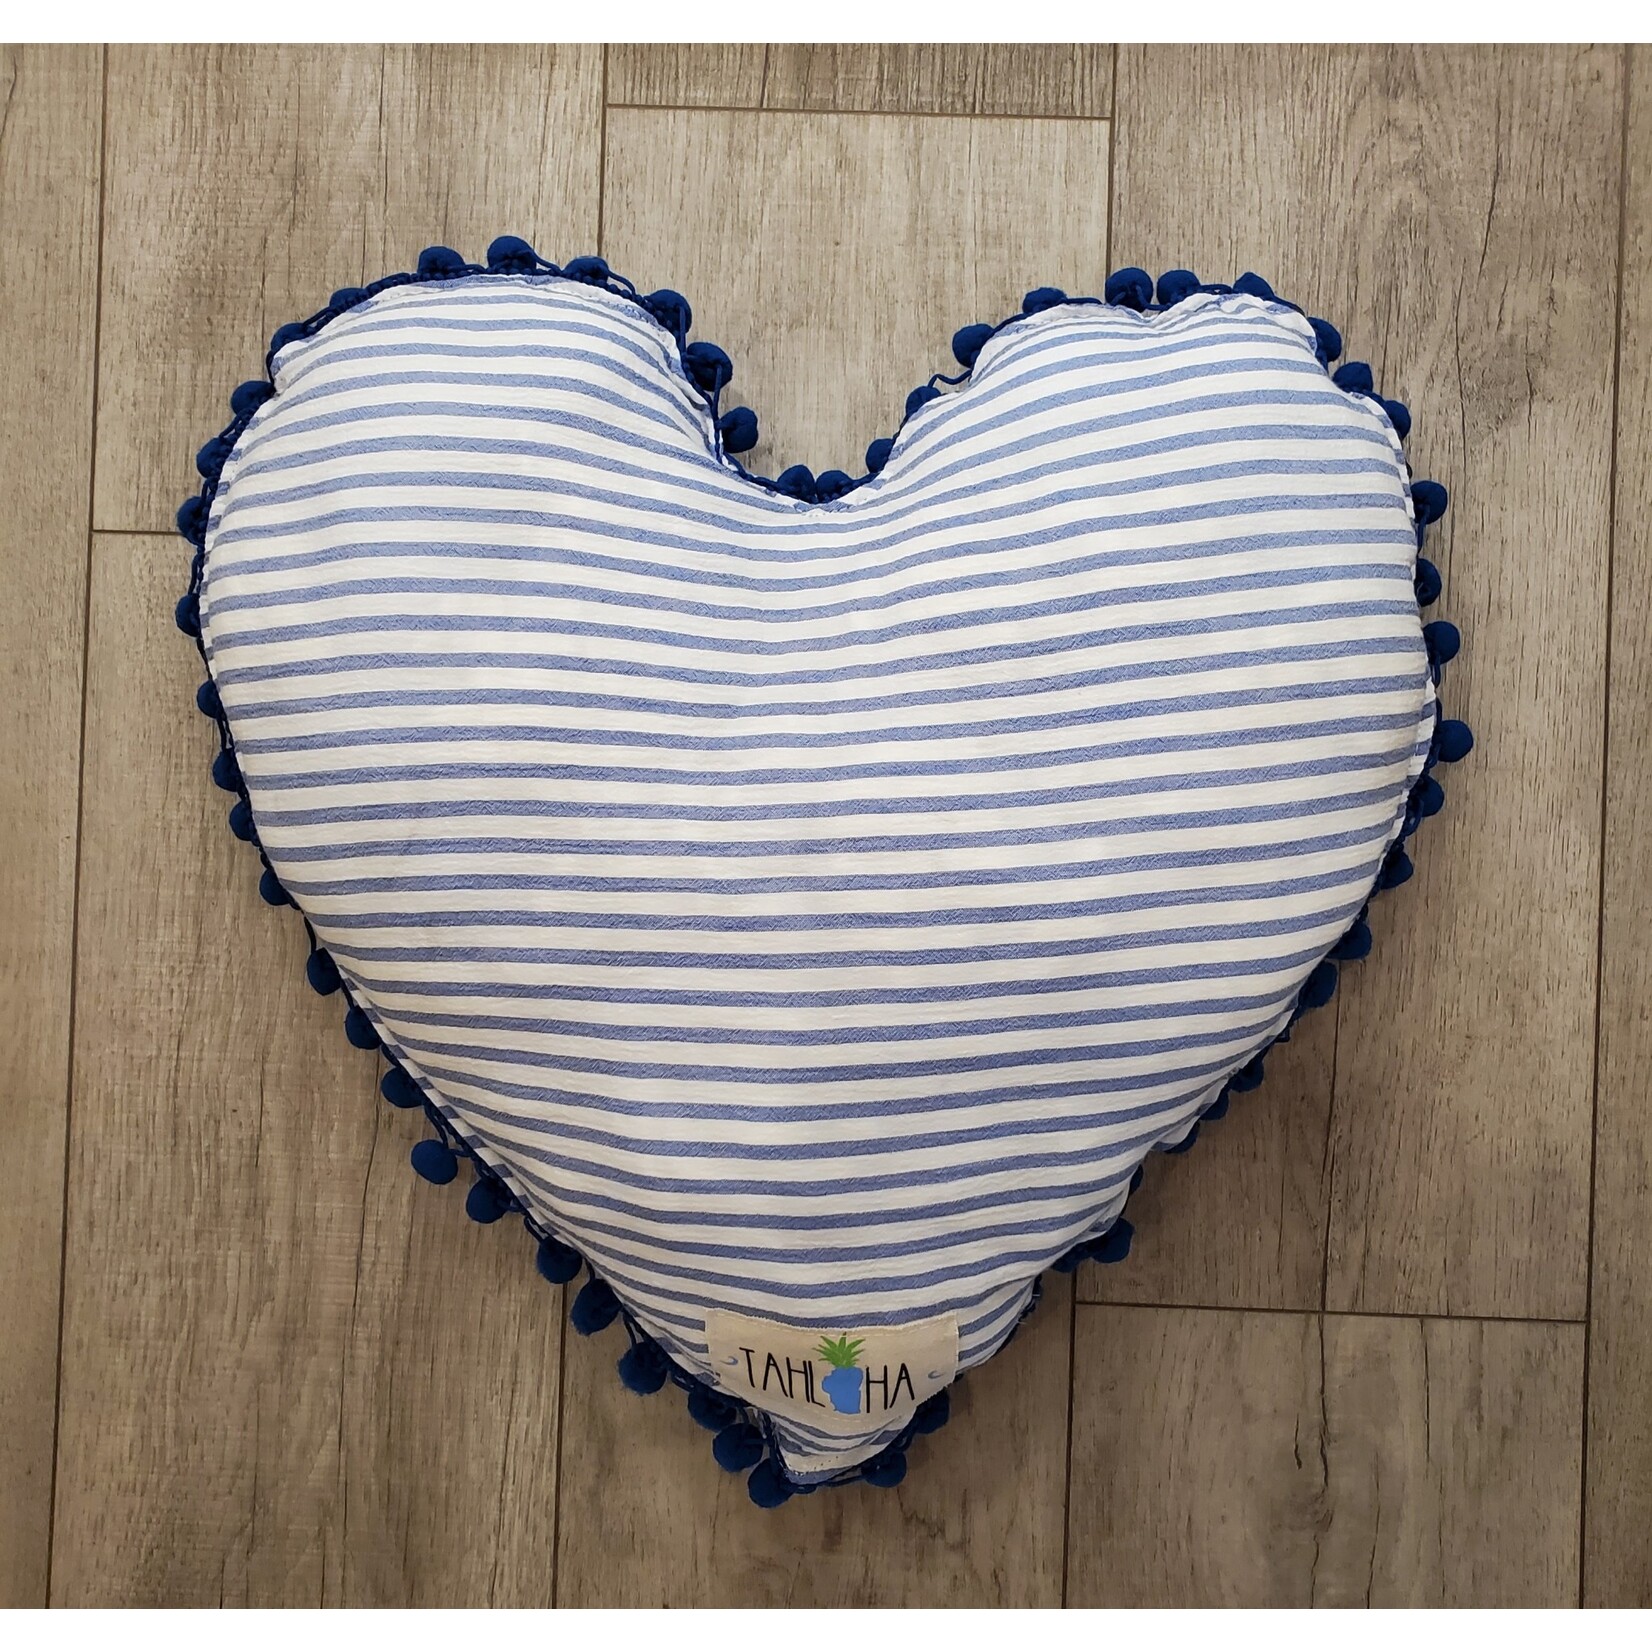 Tahloha Striped Heart Pillow - Blue